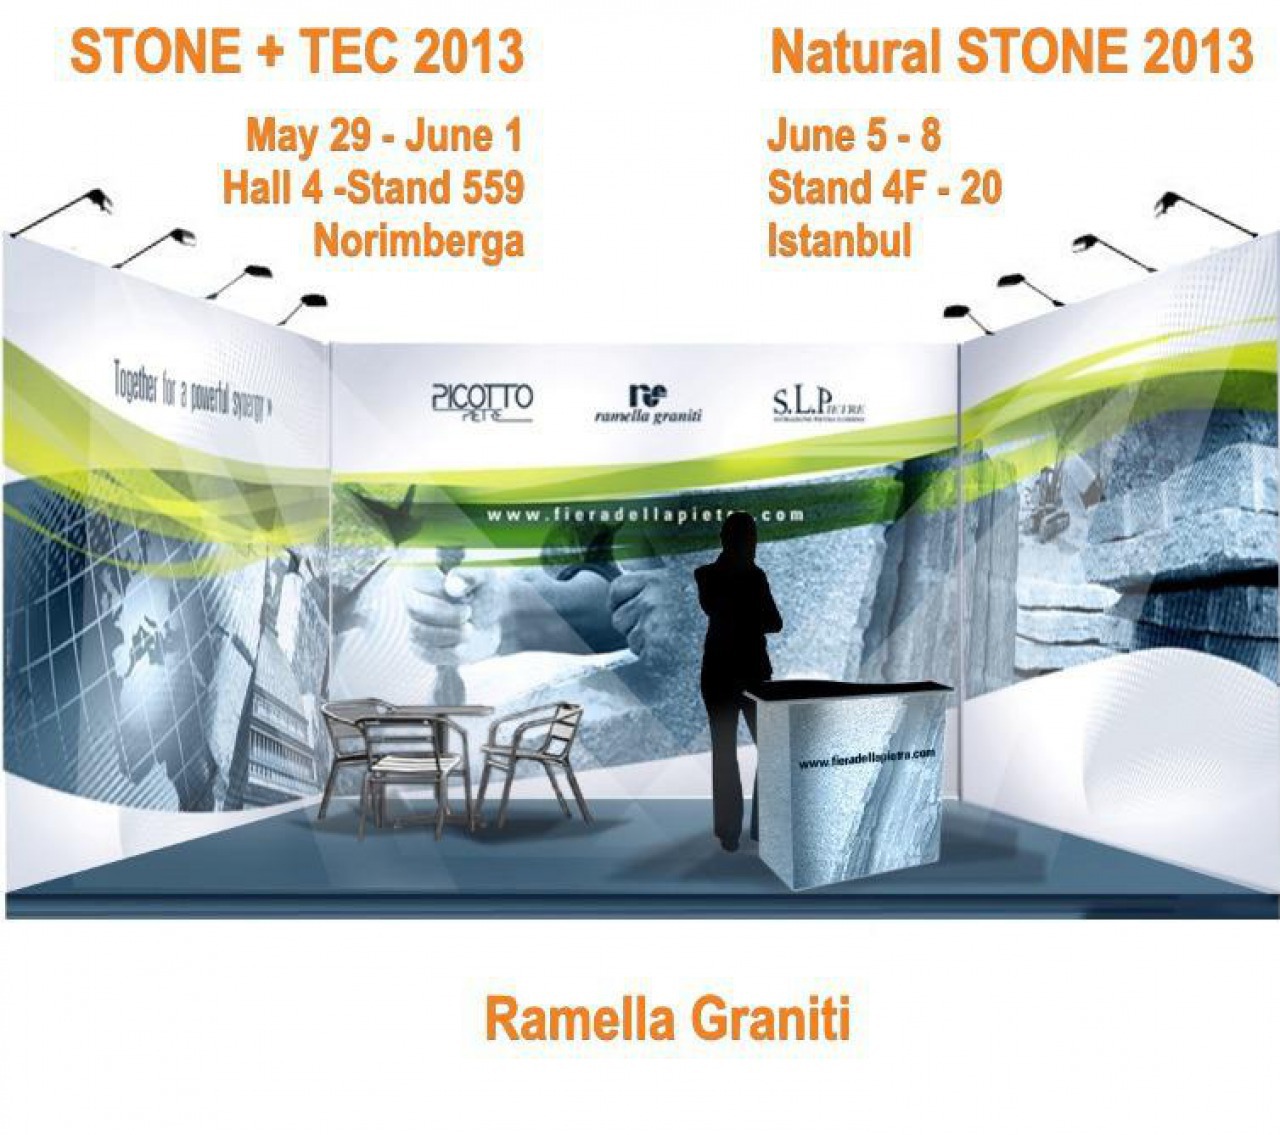 Ramella Graniti Norimberga Ston+tec 2013 - Istanbul NATURAL STONE